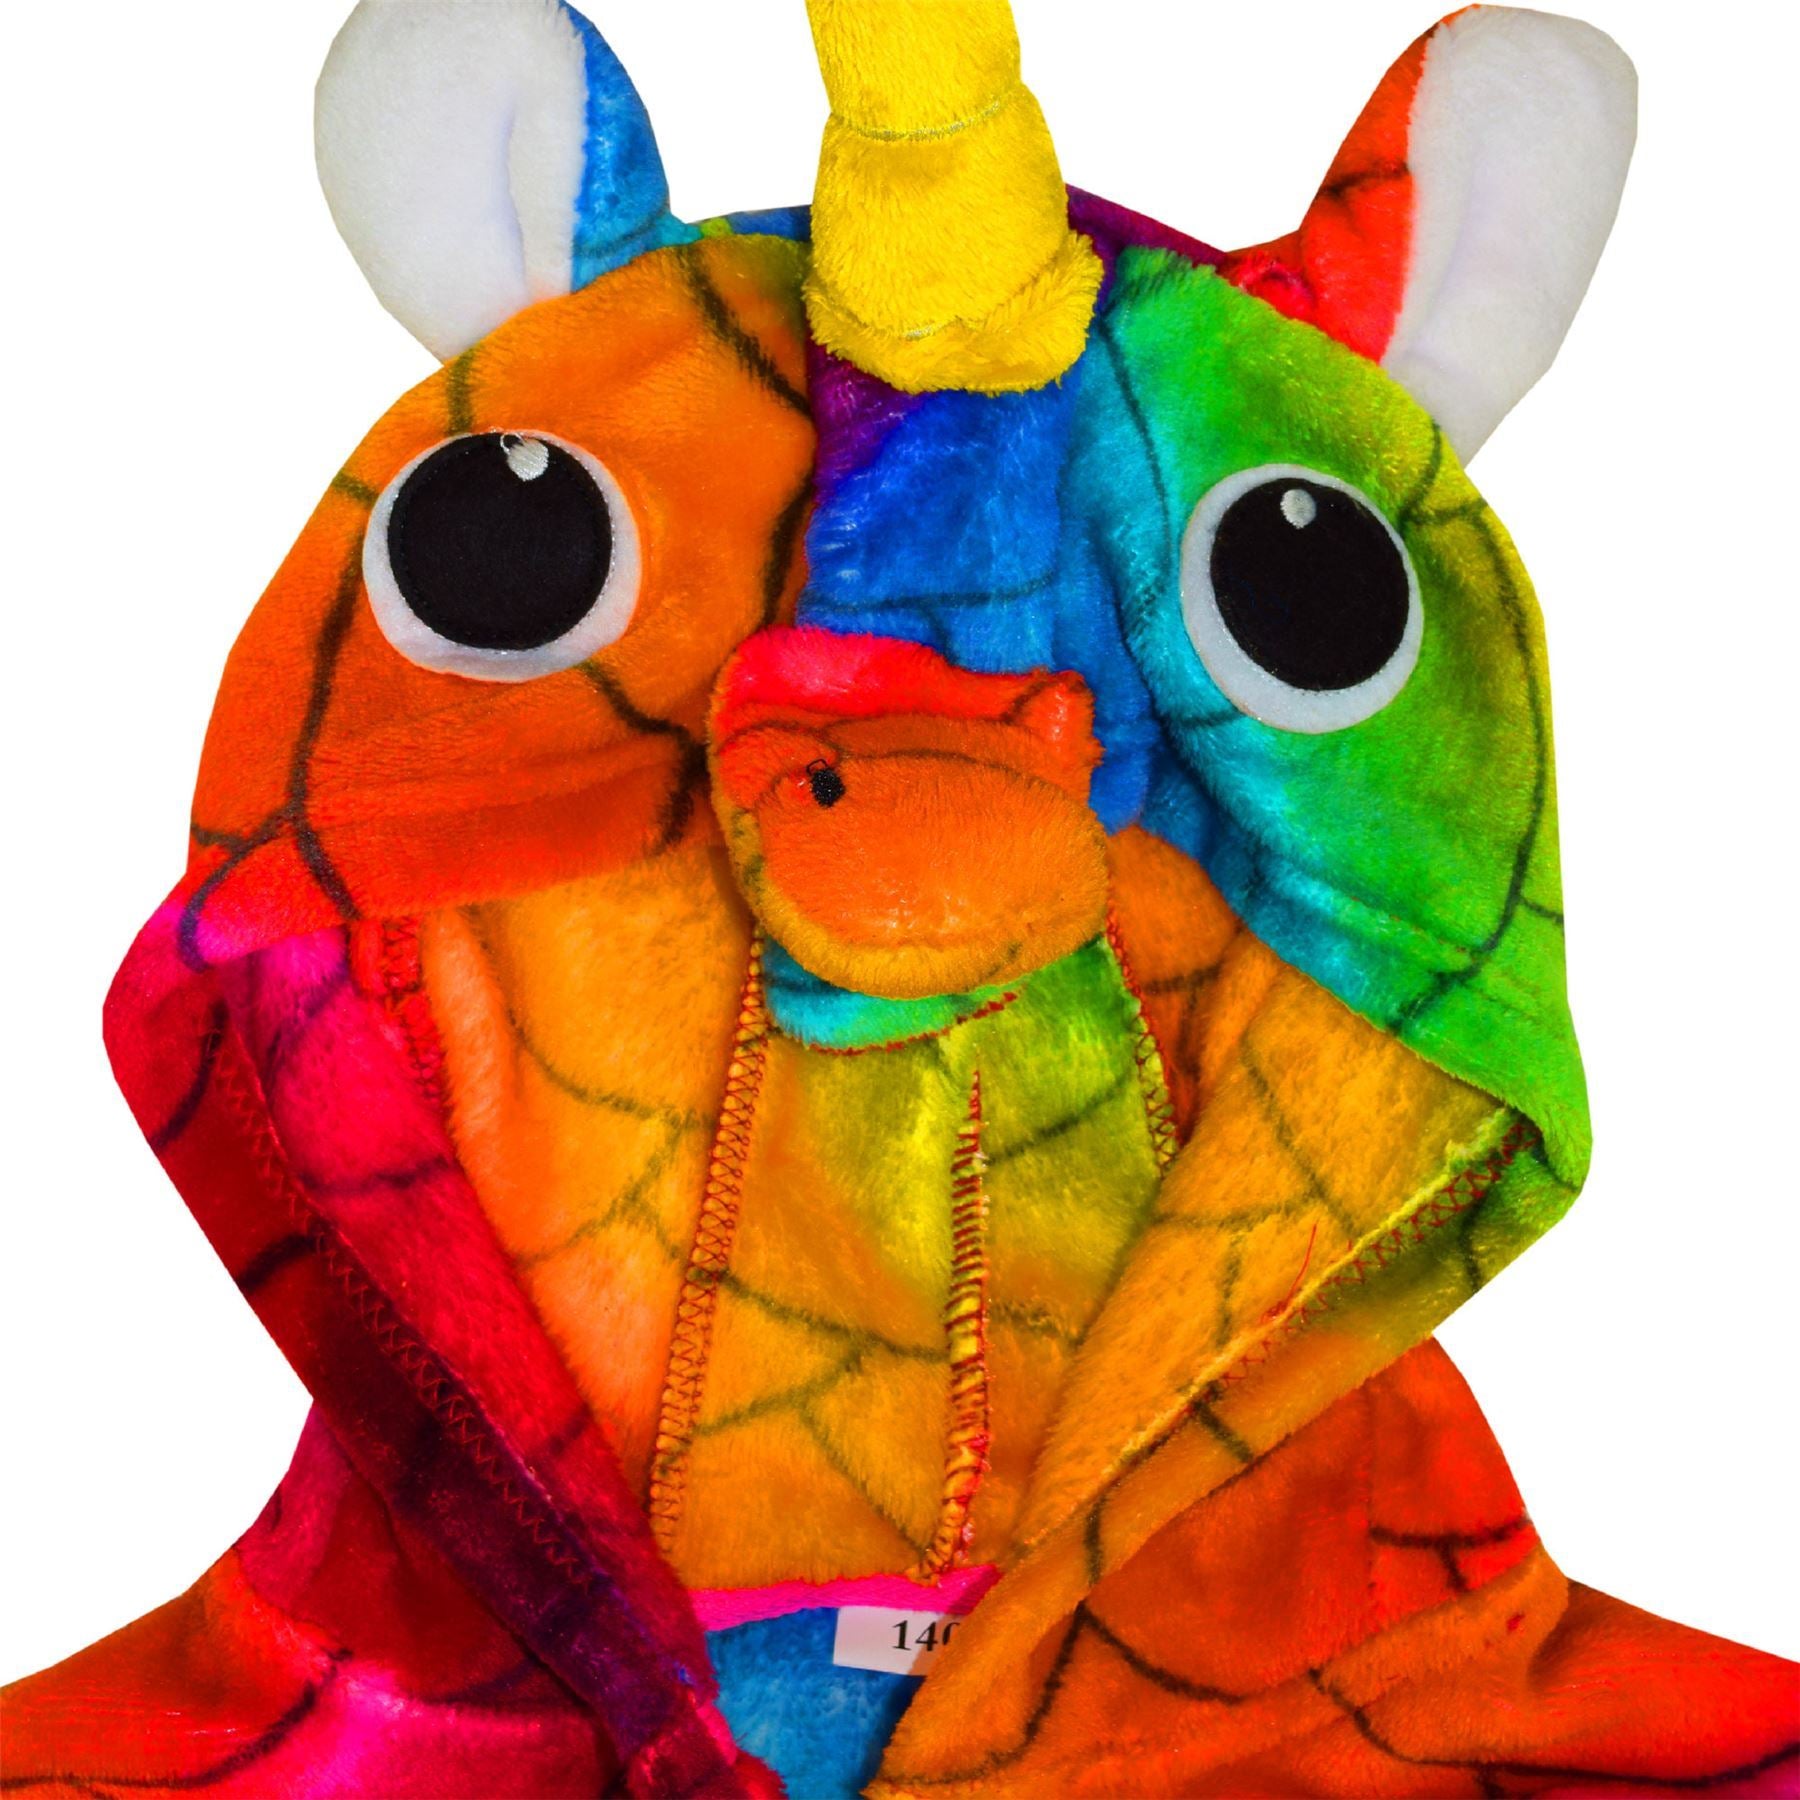 Kids Girls Boys Super Soft 3D Animal Unicorn Rainbow Scales Hooded Bathrobe